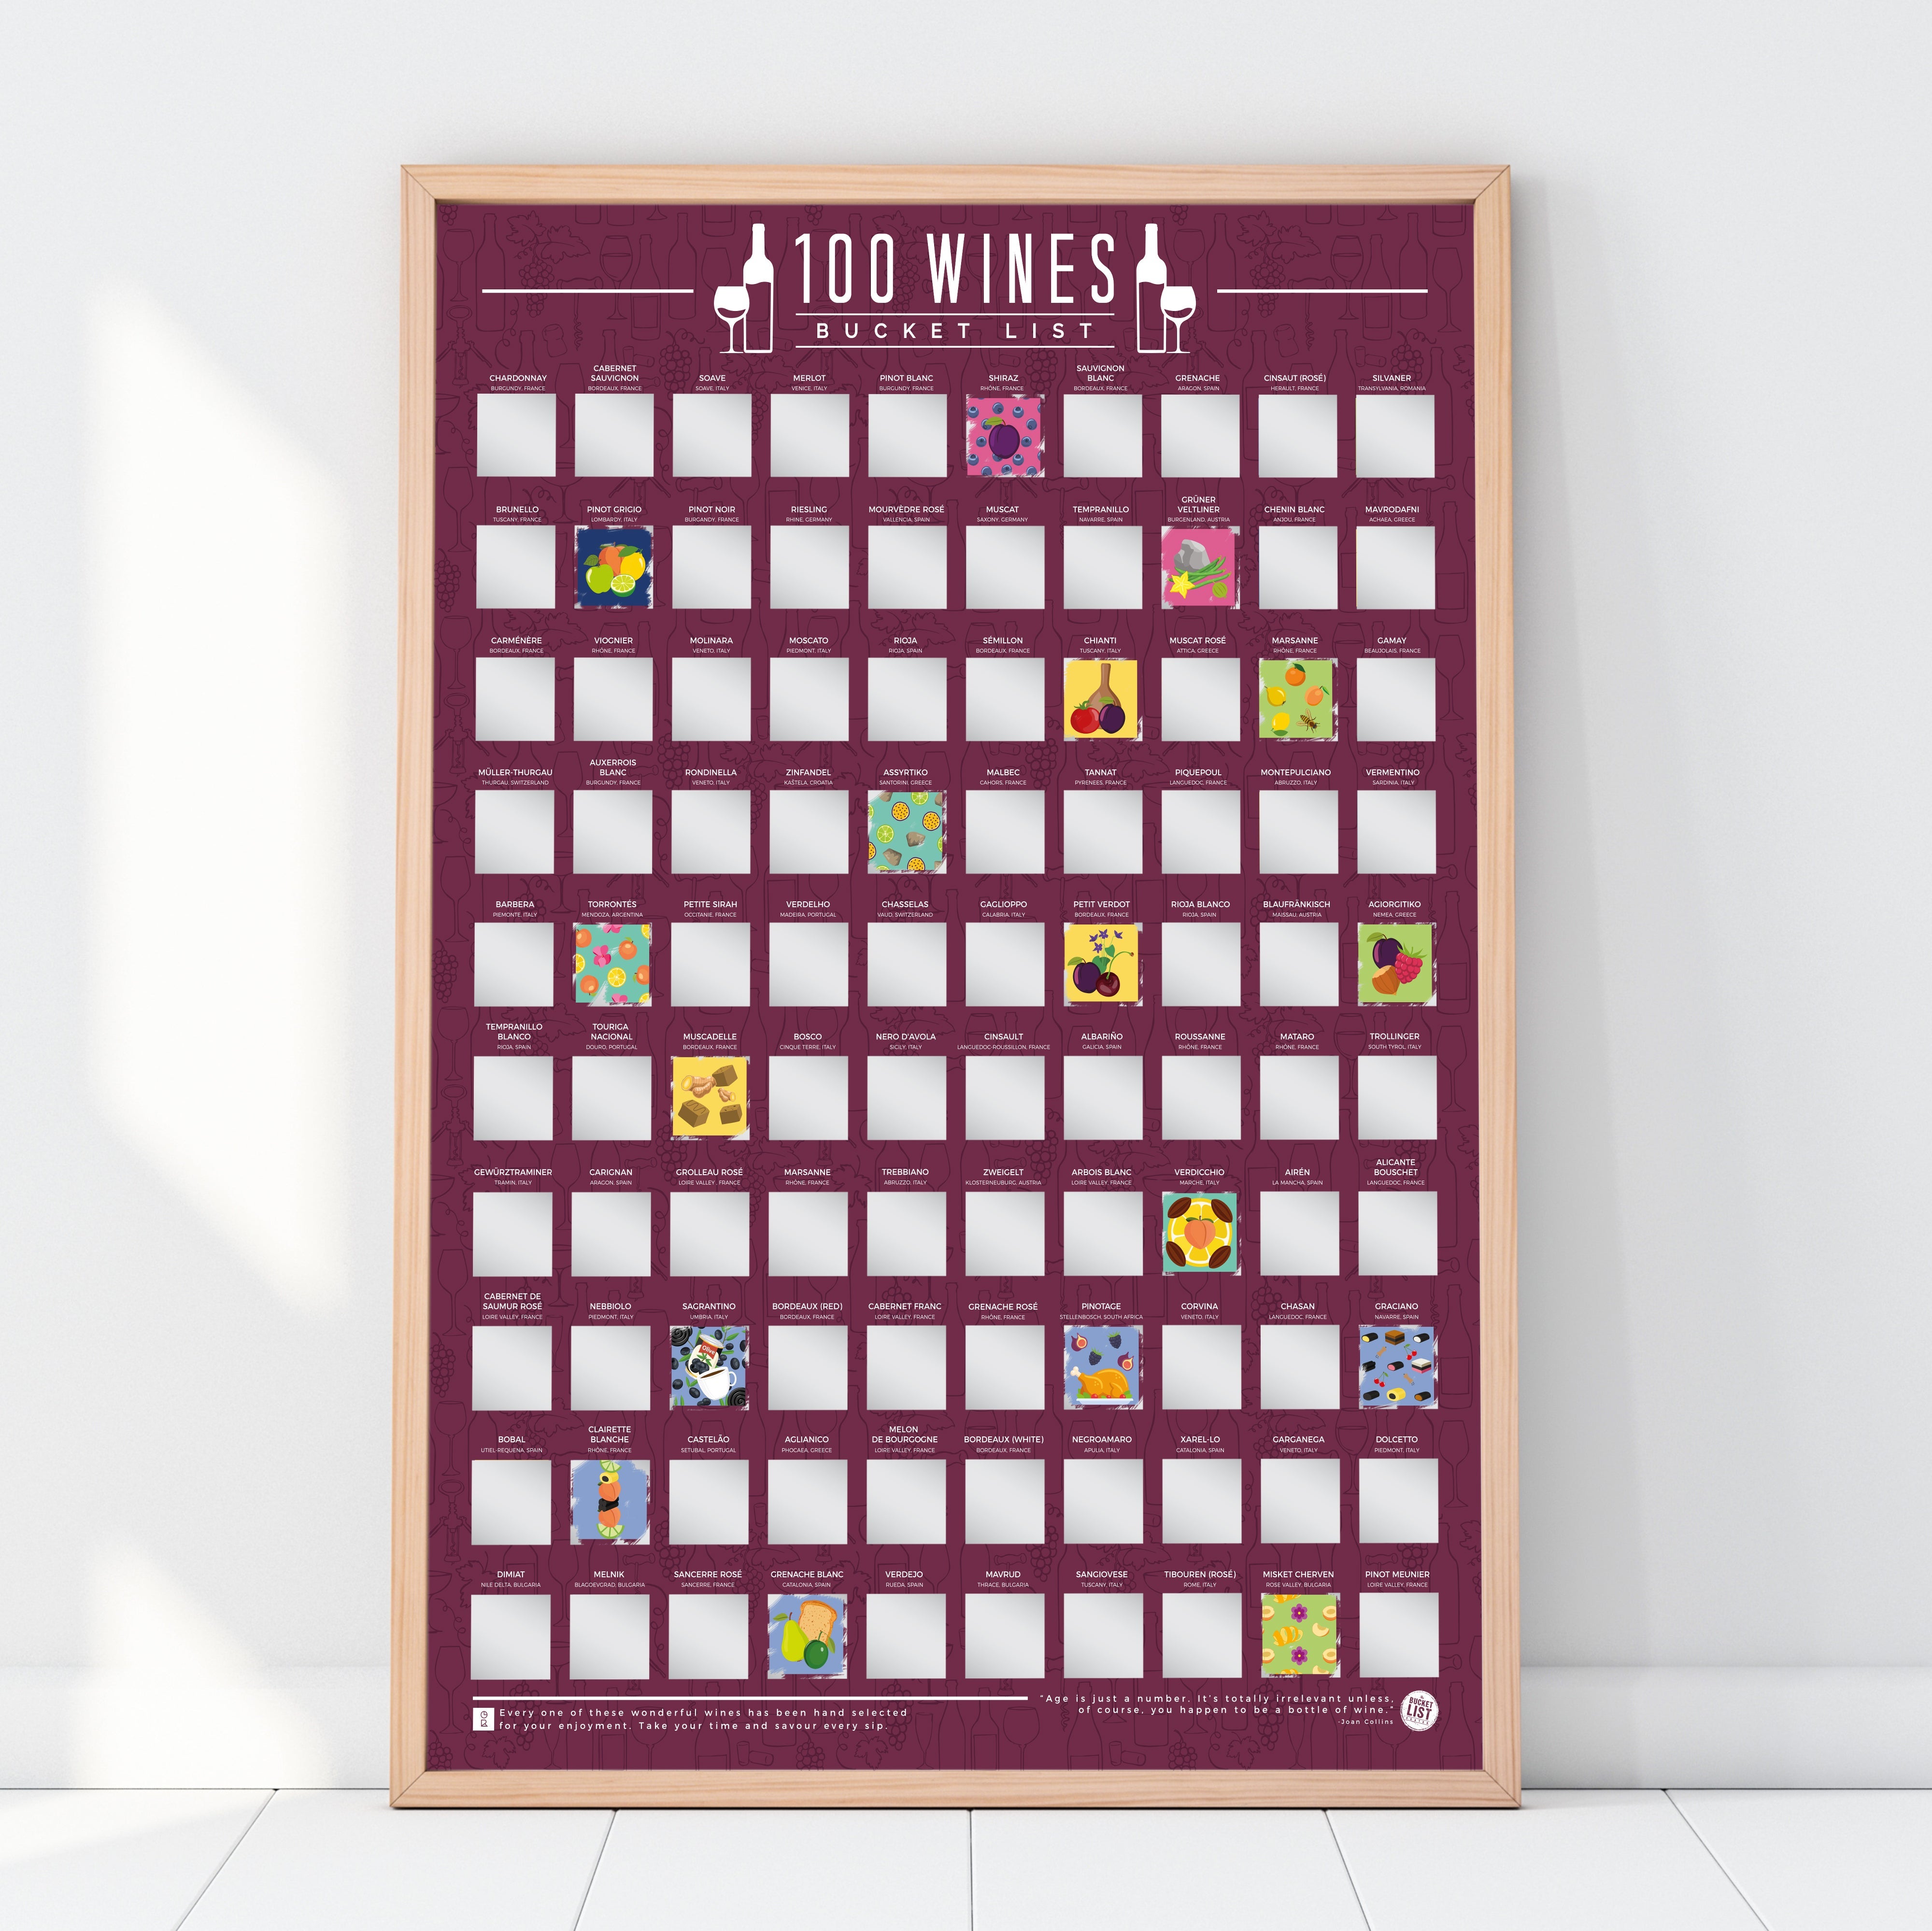 Bucket List Scratch Poster - 100 Wines